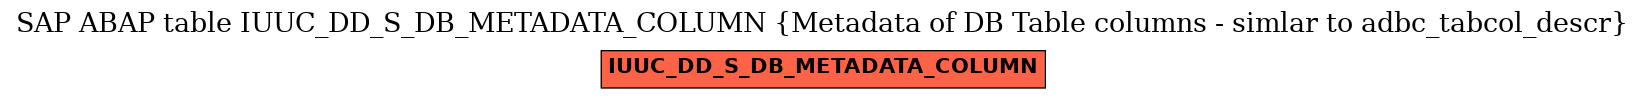 E-R Diagram for table IUUC_DD_S_DB_METADATA_COLUMN (Metadata of DB Table columns - simlar to adbc_tabcol_descr)